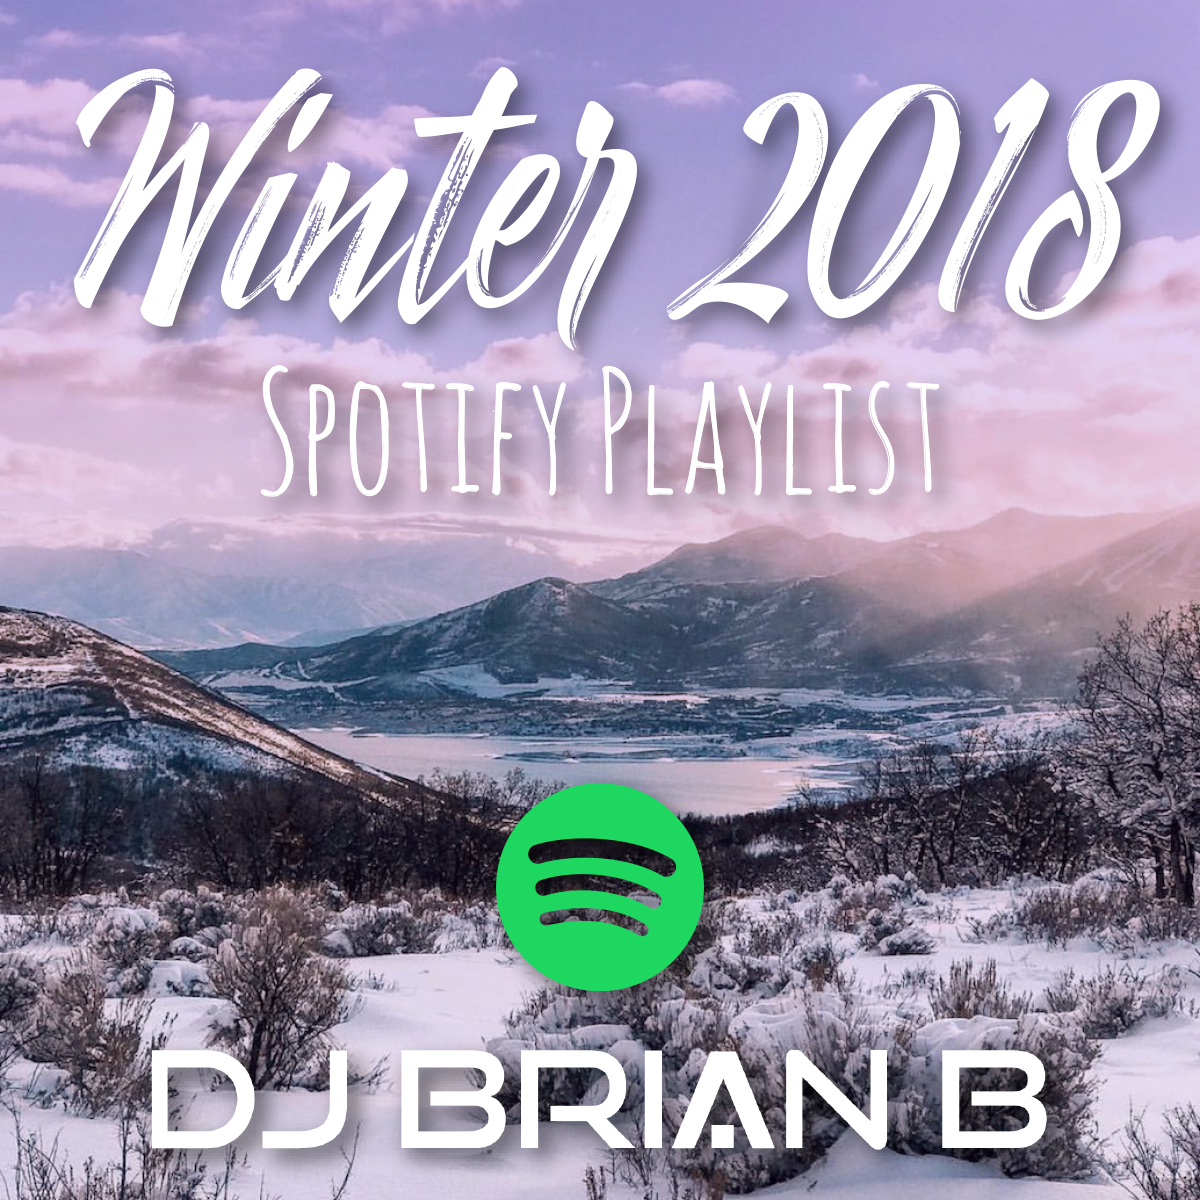 Winter 2018 Spotify Playlist